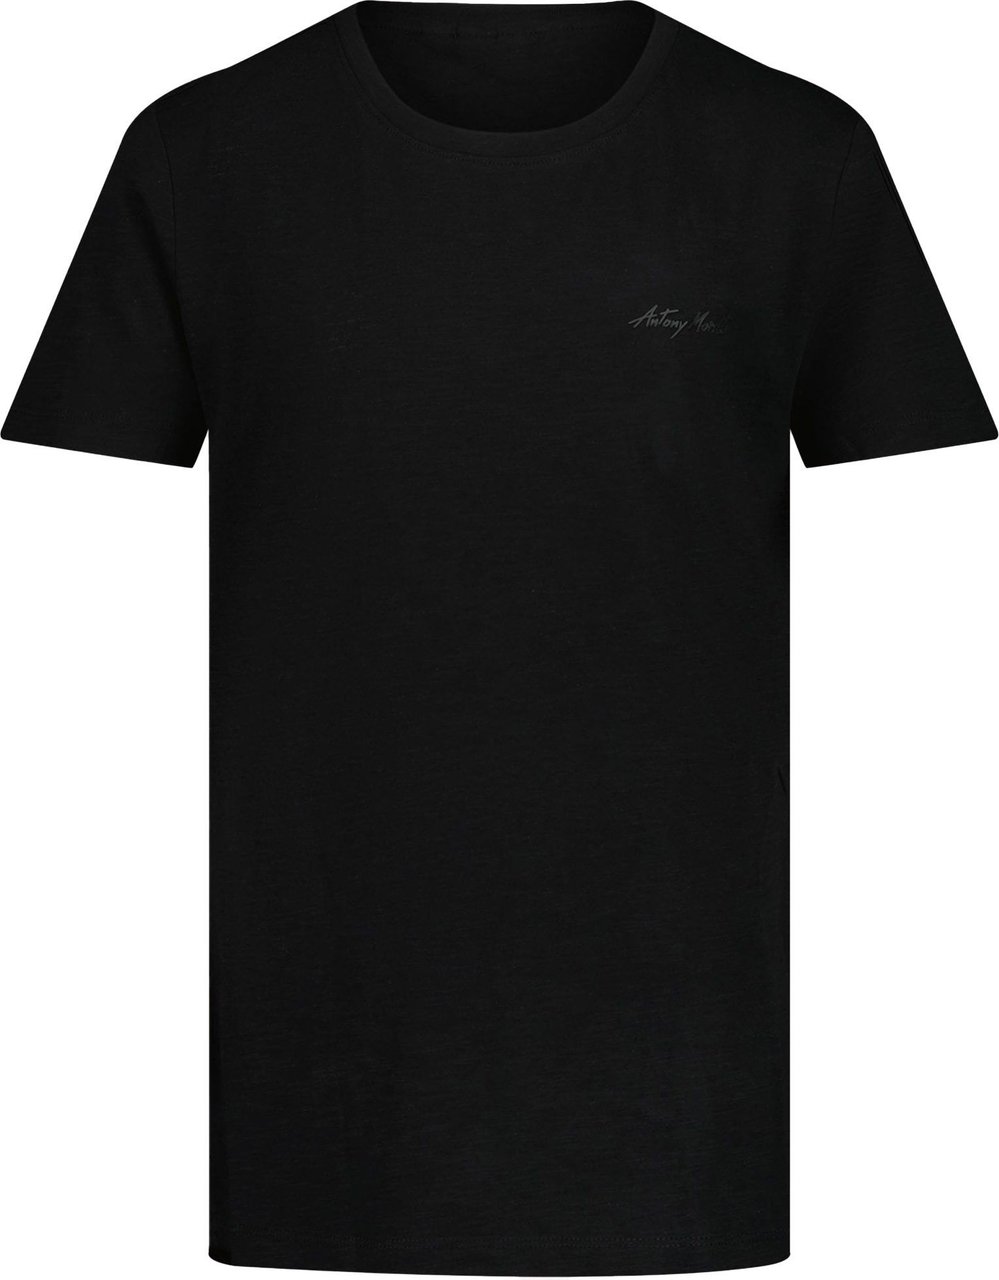 Antony Morato Antony Morato Kinder Jongens T-shirt Zwart Zwart